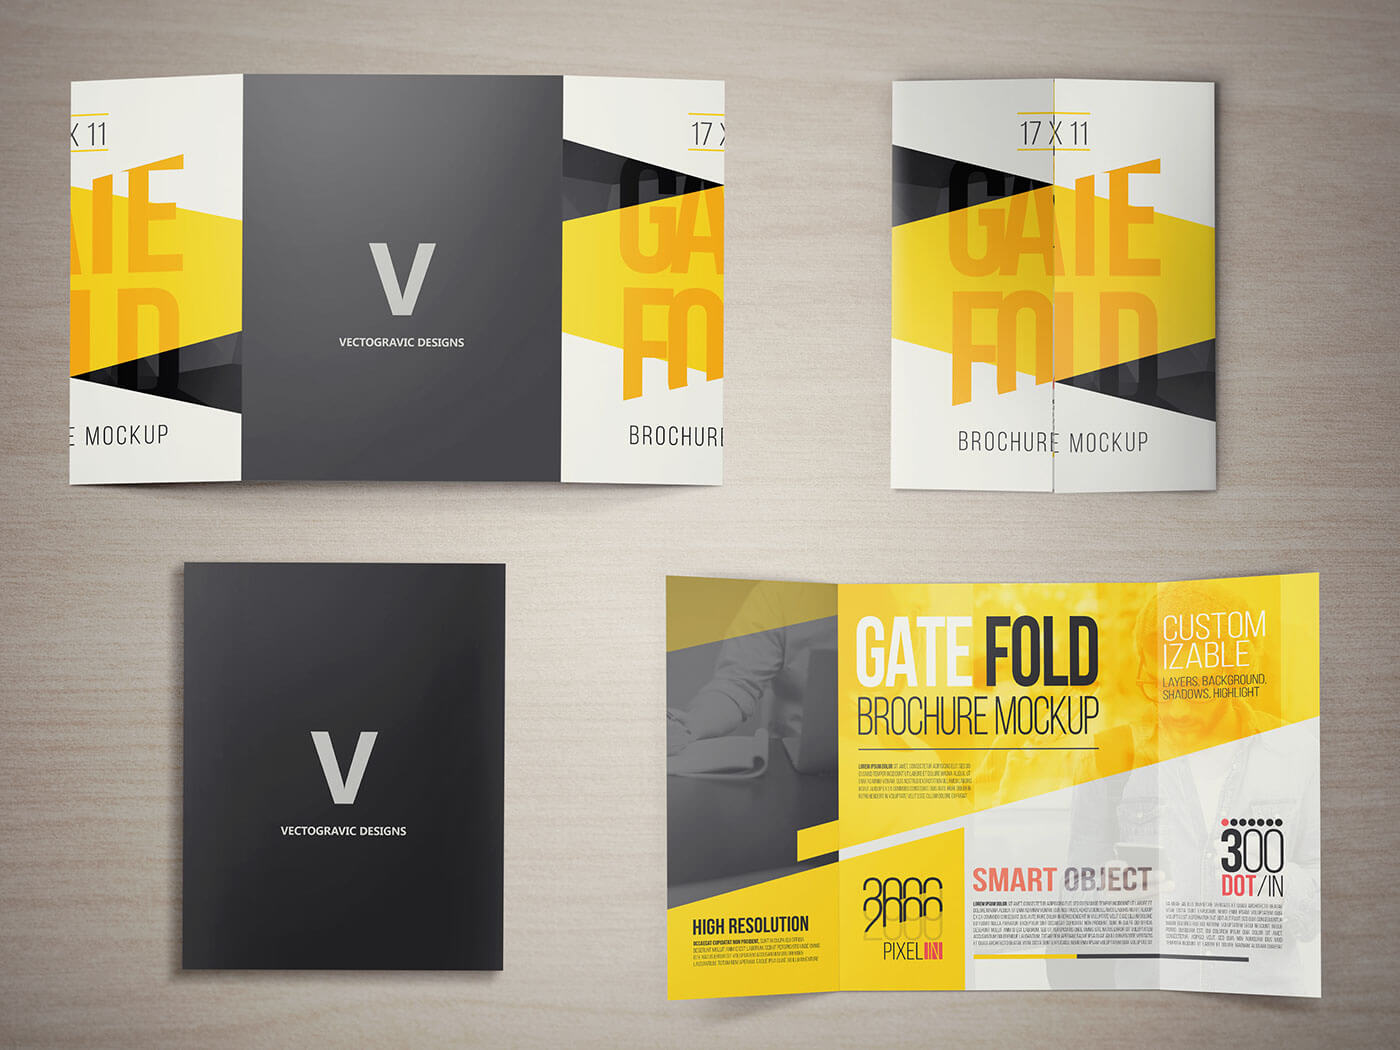 17 X 11 Gate Fold Brochure Mockup On Behance For Gate Fold Brochure Template